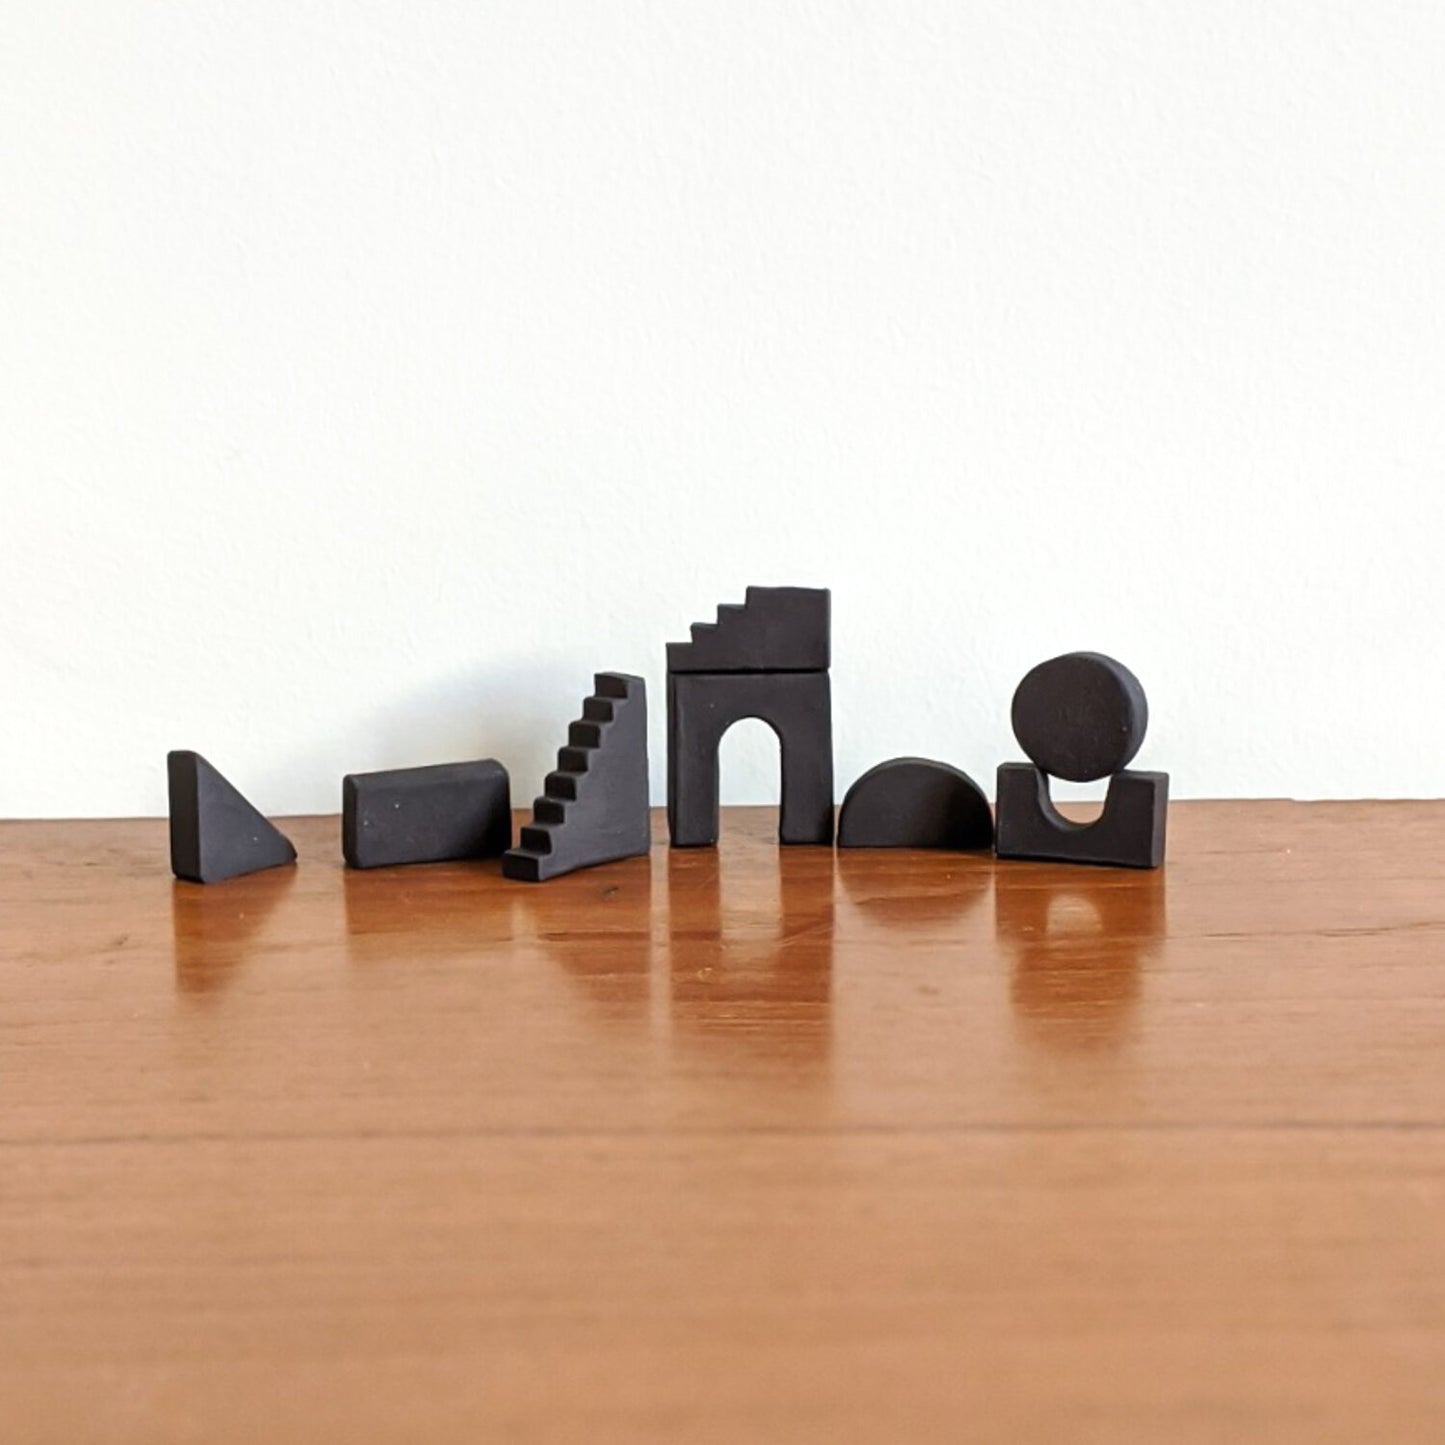 Miniature Building Blocks